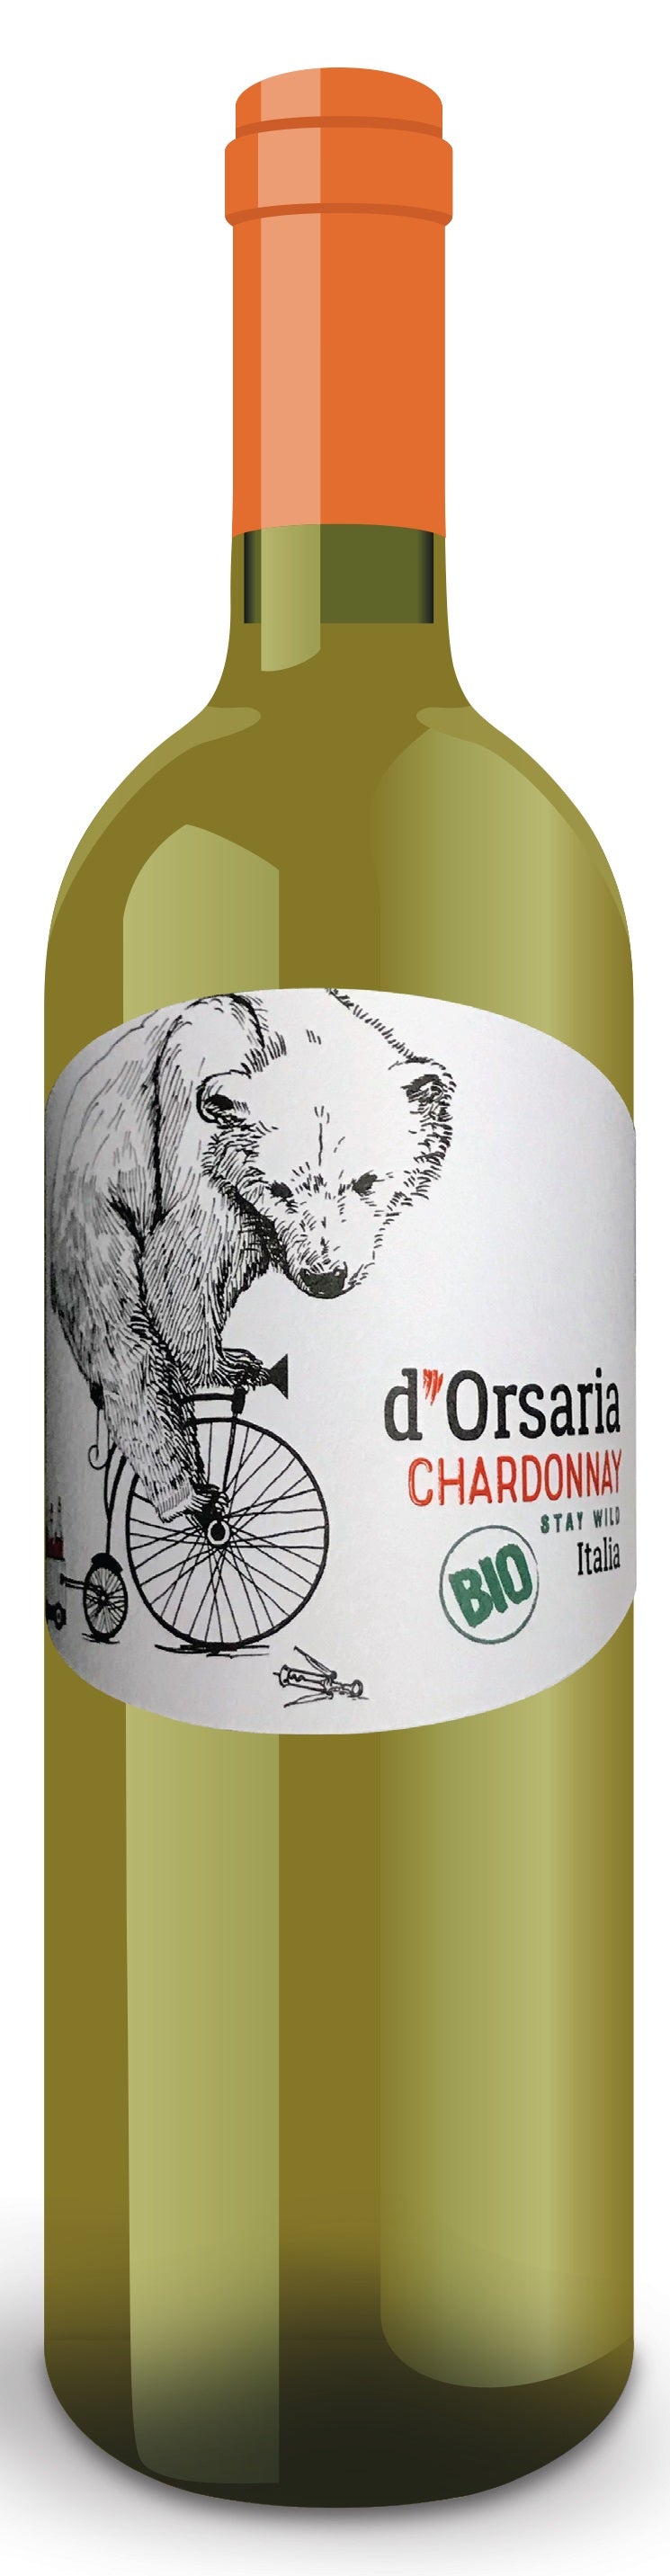 D'Orsaria "Bear" Bio Chardonnay IGT 2019 12x750ml 2019